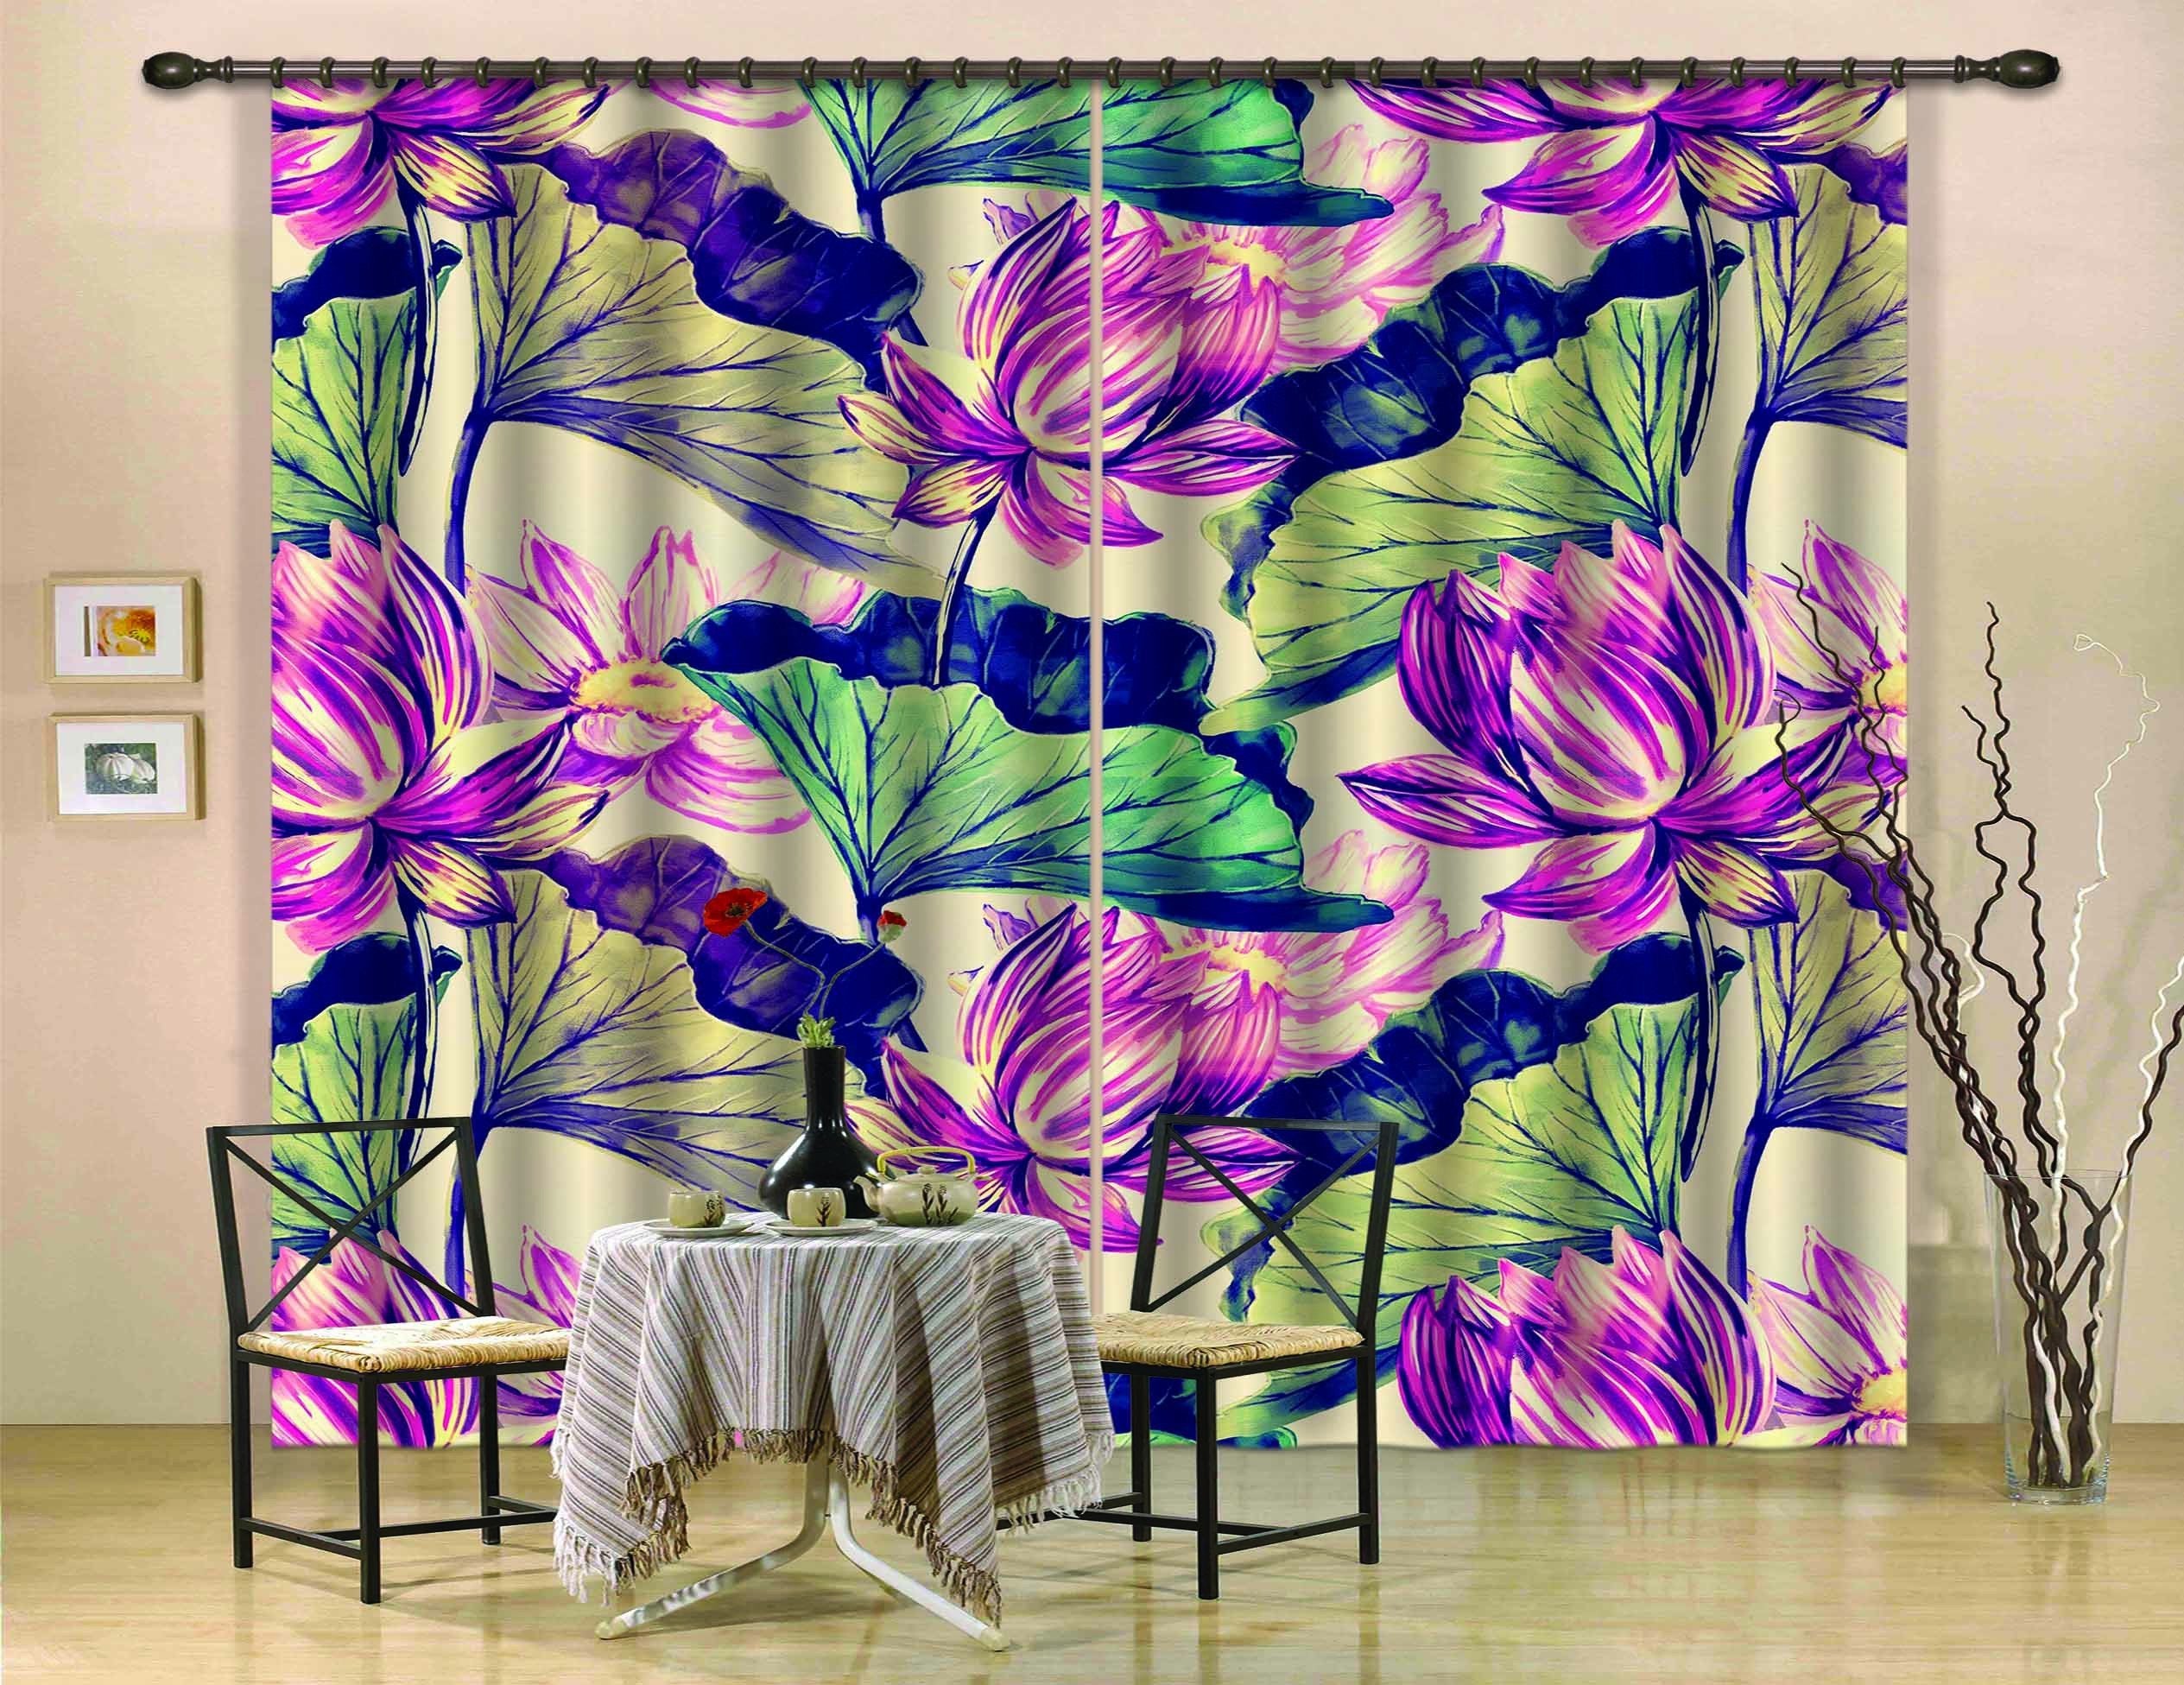 3D Lotus Flowers Painting 742 Curtains Drapes Wallpaper AJ Wallpaper 